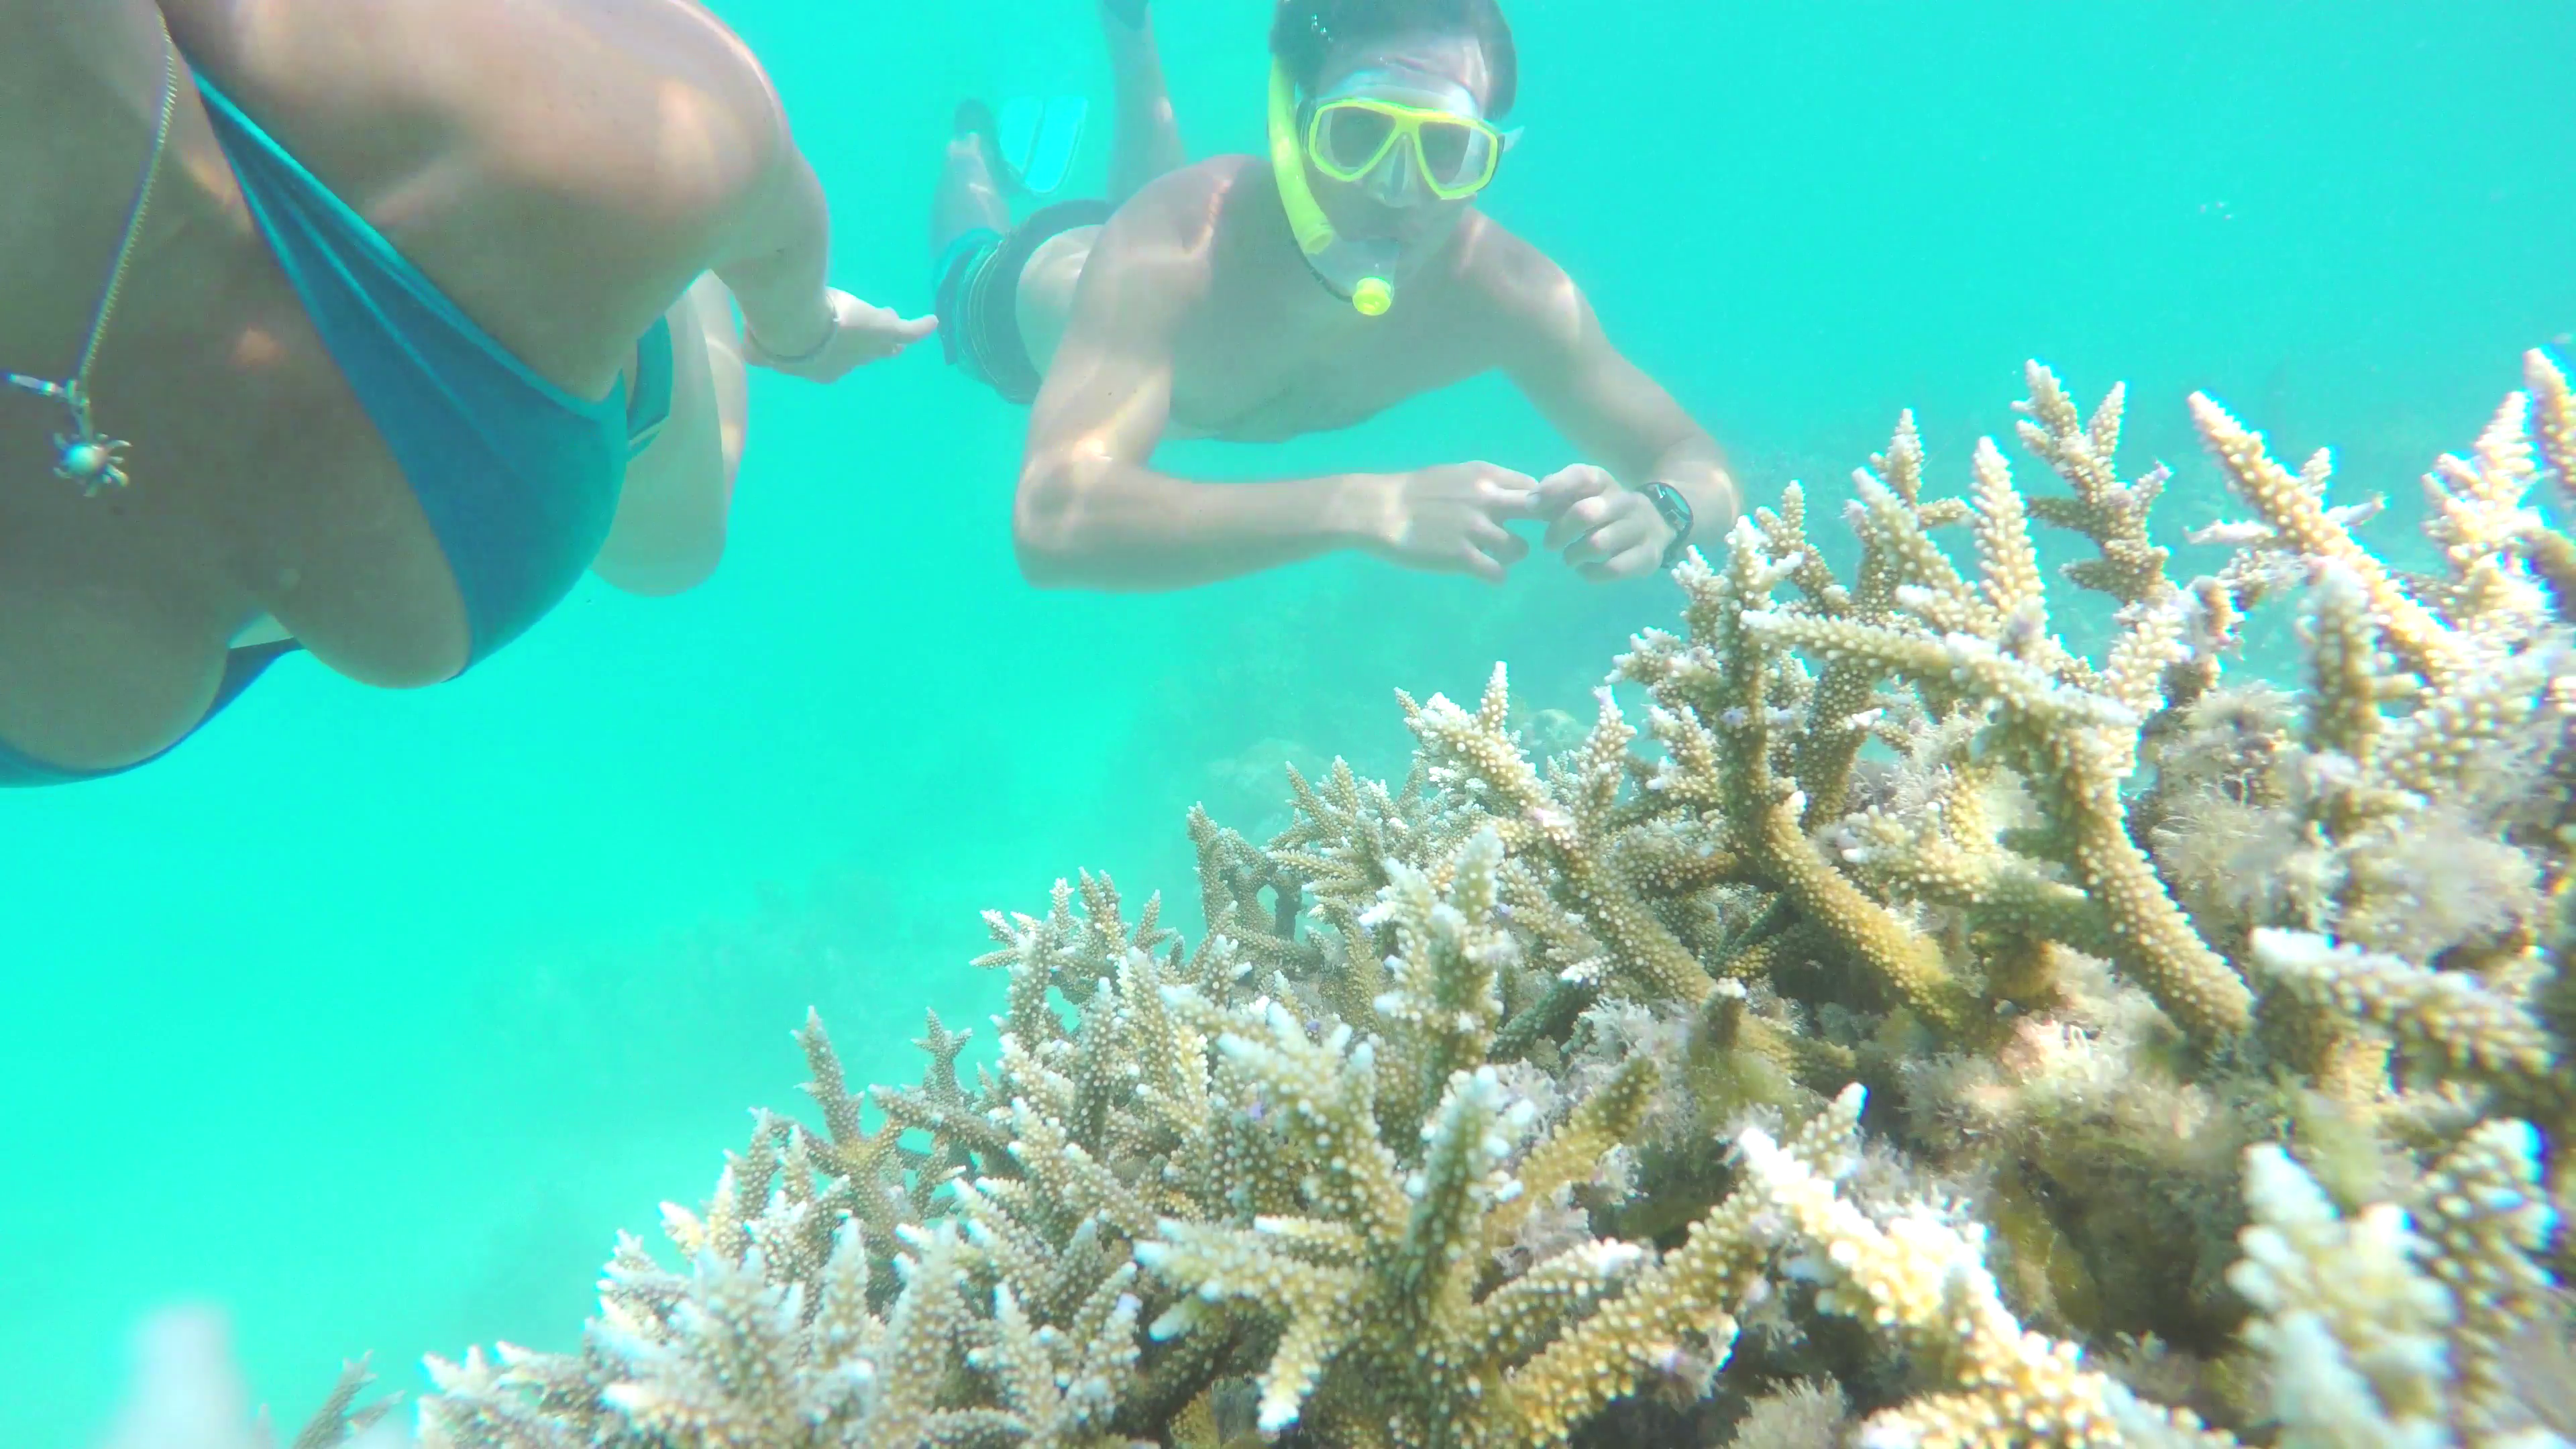 UNDERWATER: Couple of divers snorkeling the reef in Indian ocean ...